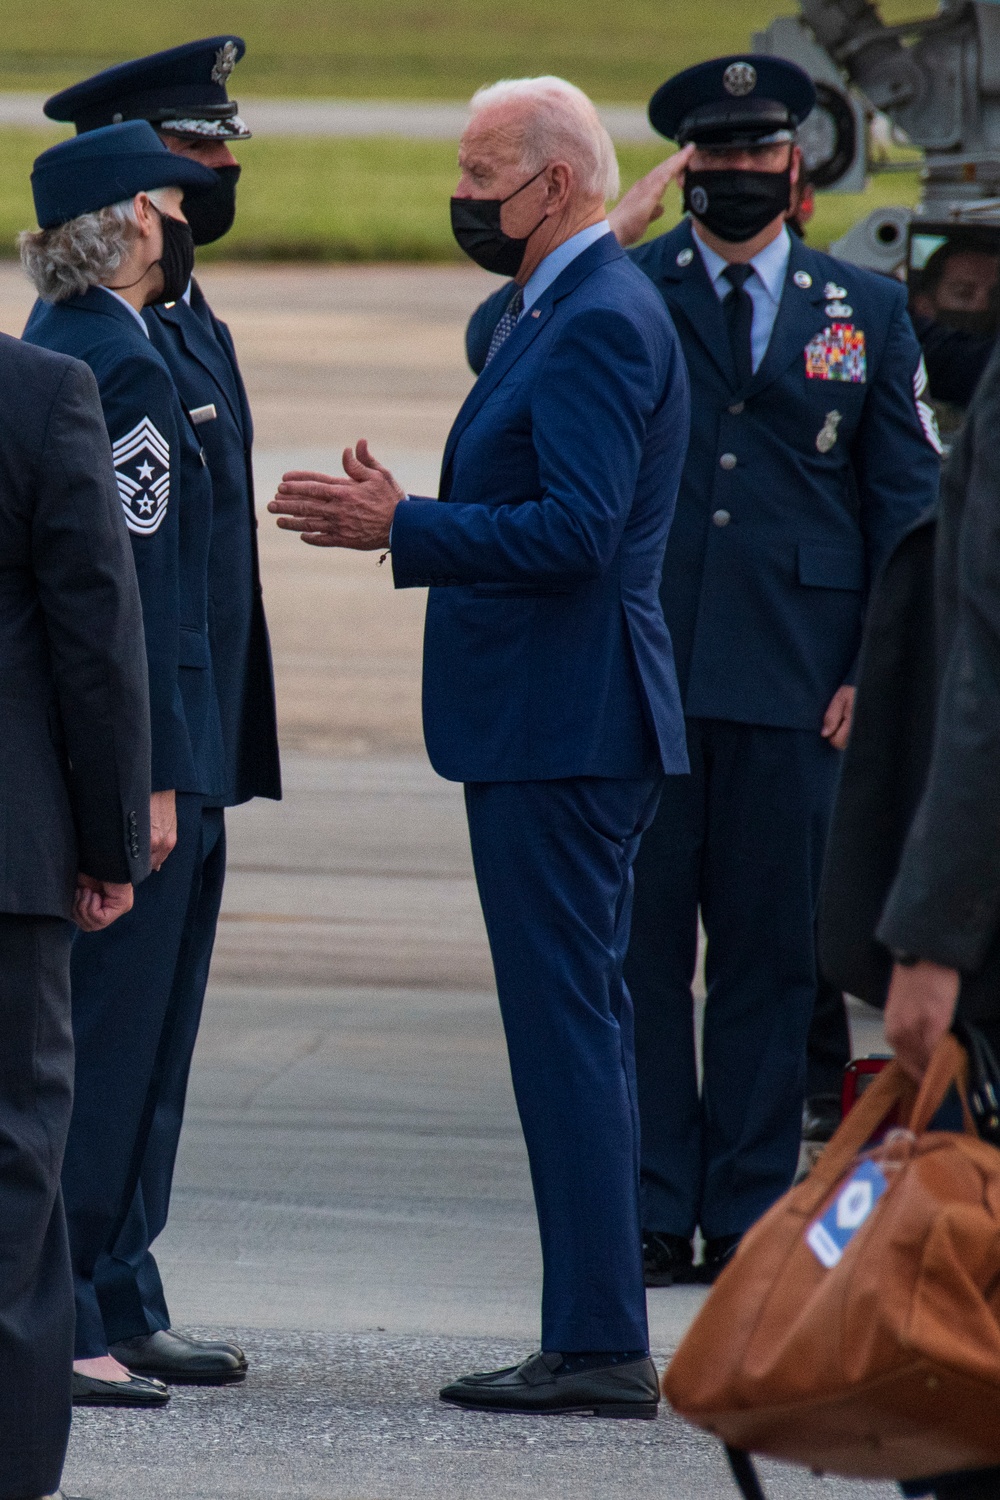 President Biden, First Lady arrive at Dobbins